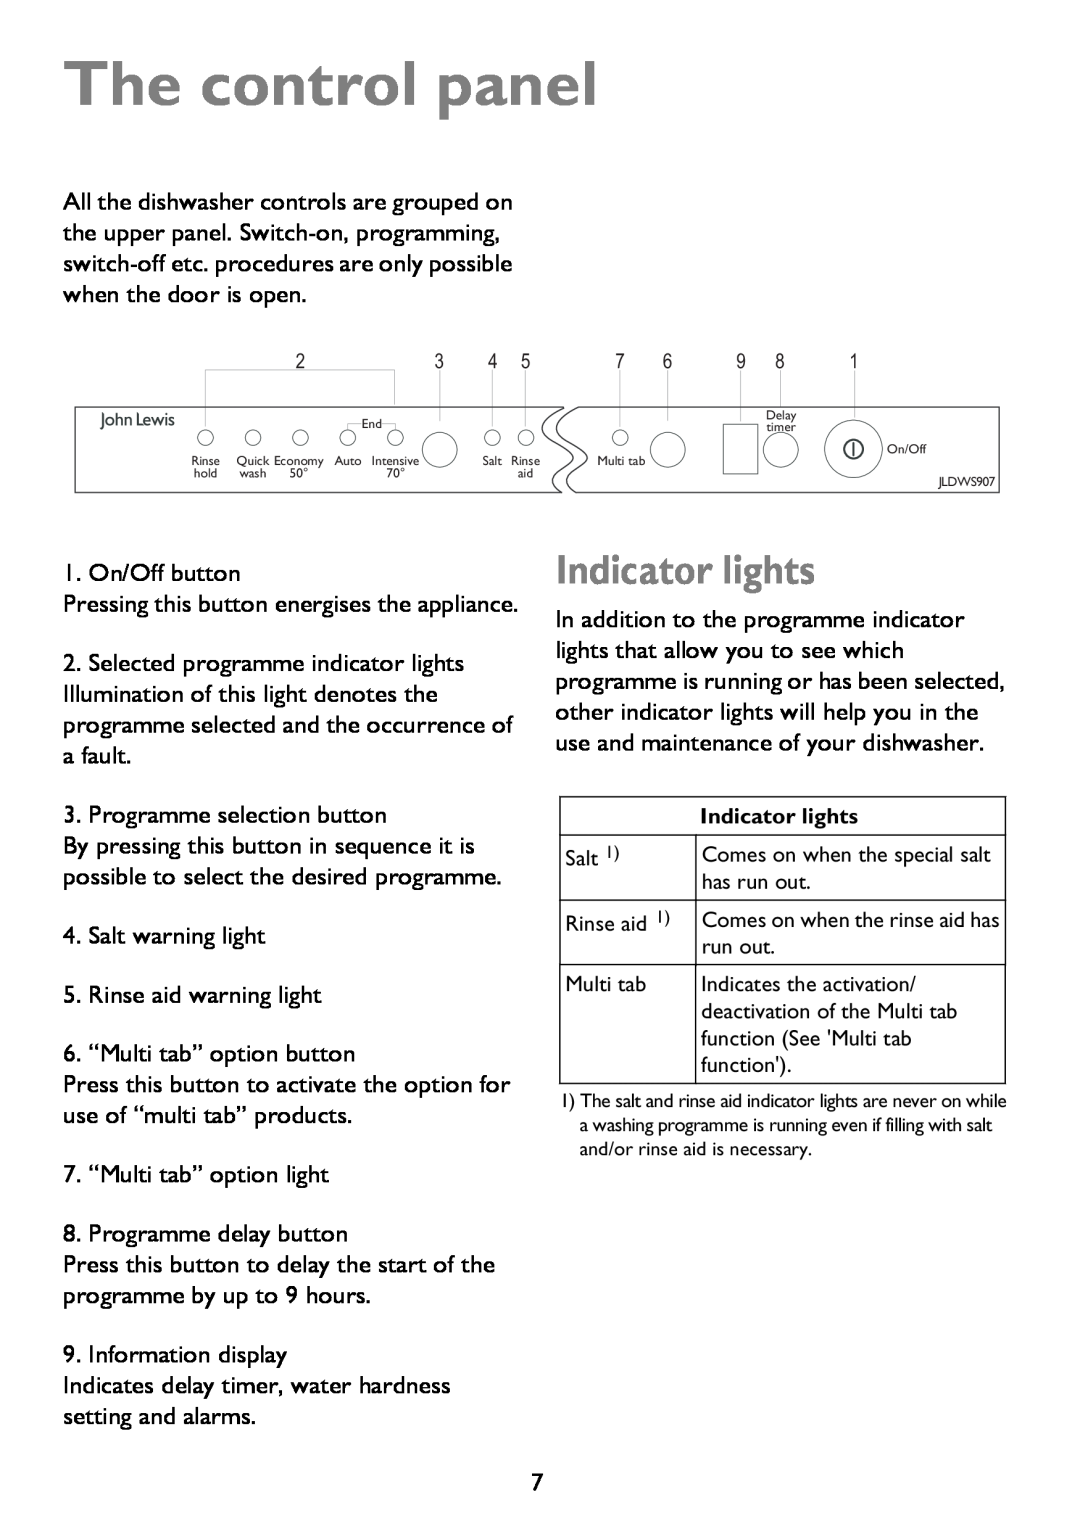 John Lewis JLDWS 907 instruction manual The control panel, Indicator lights 